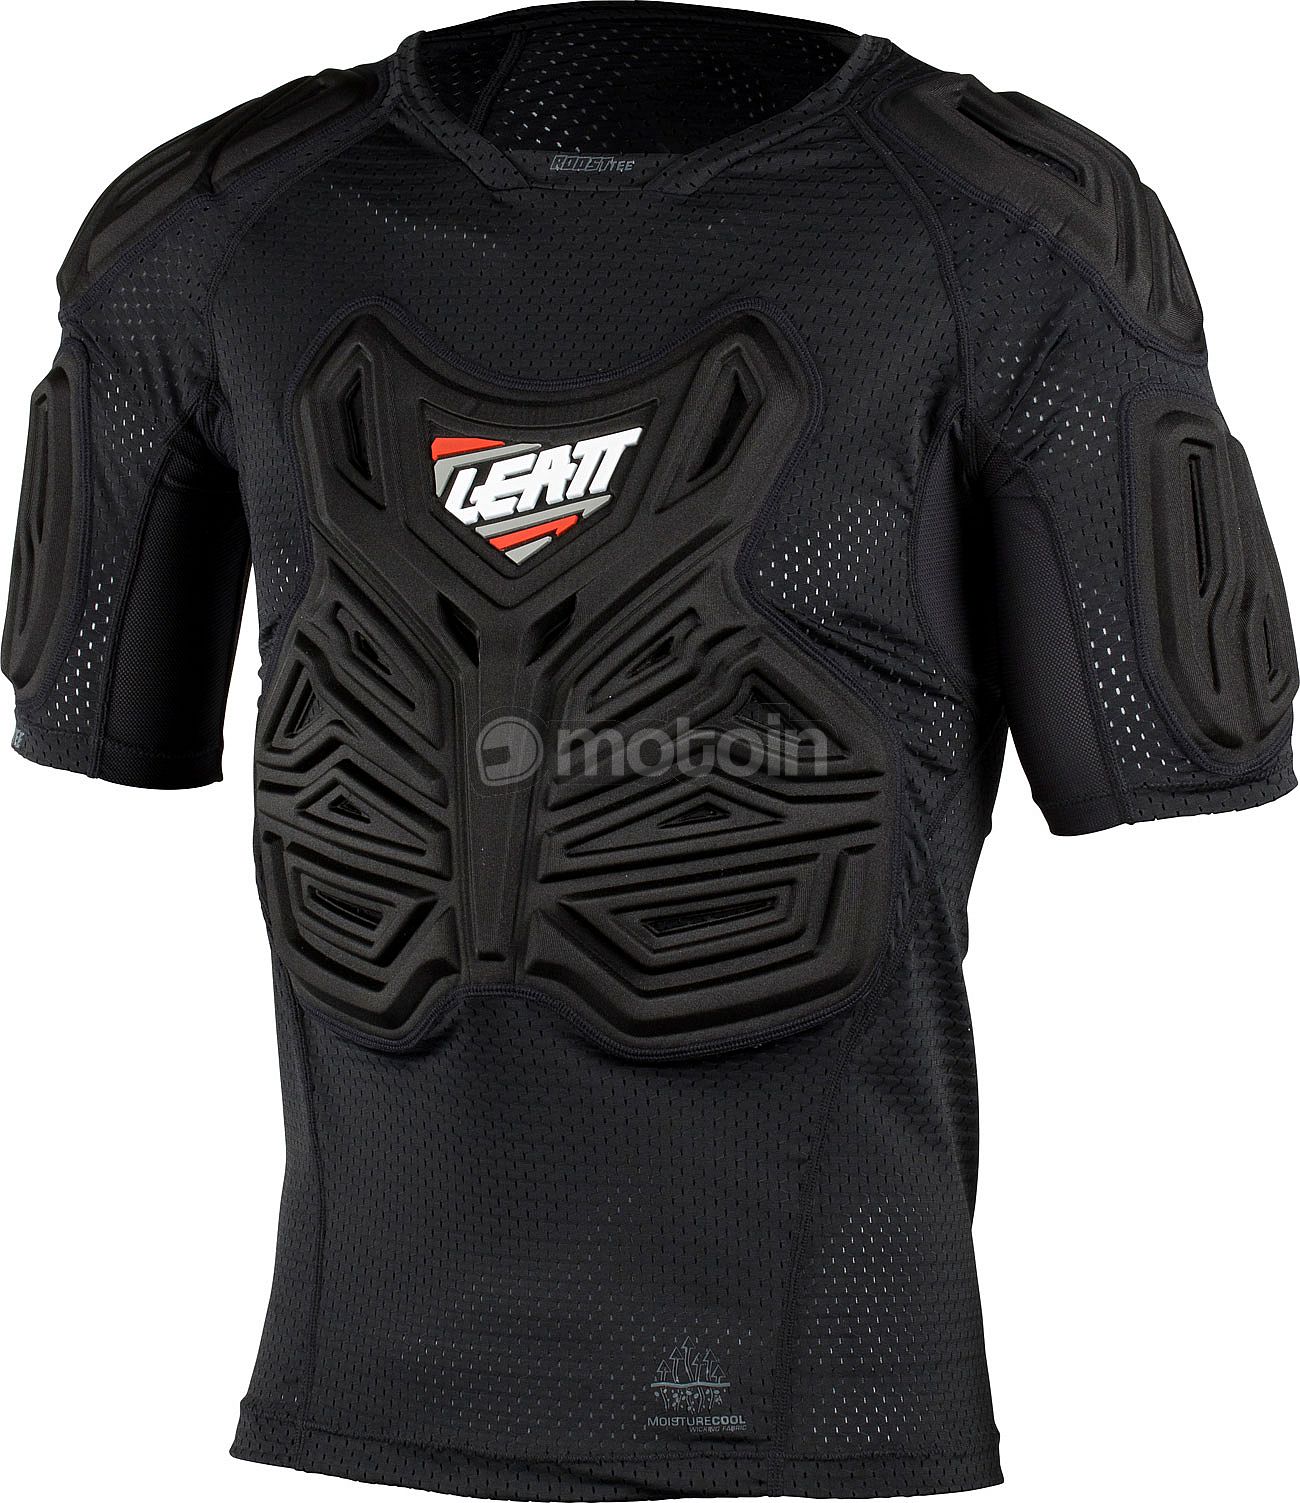 Leatt Roost, Protector chemise courte